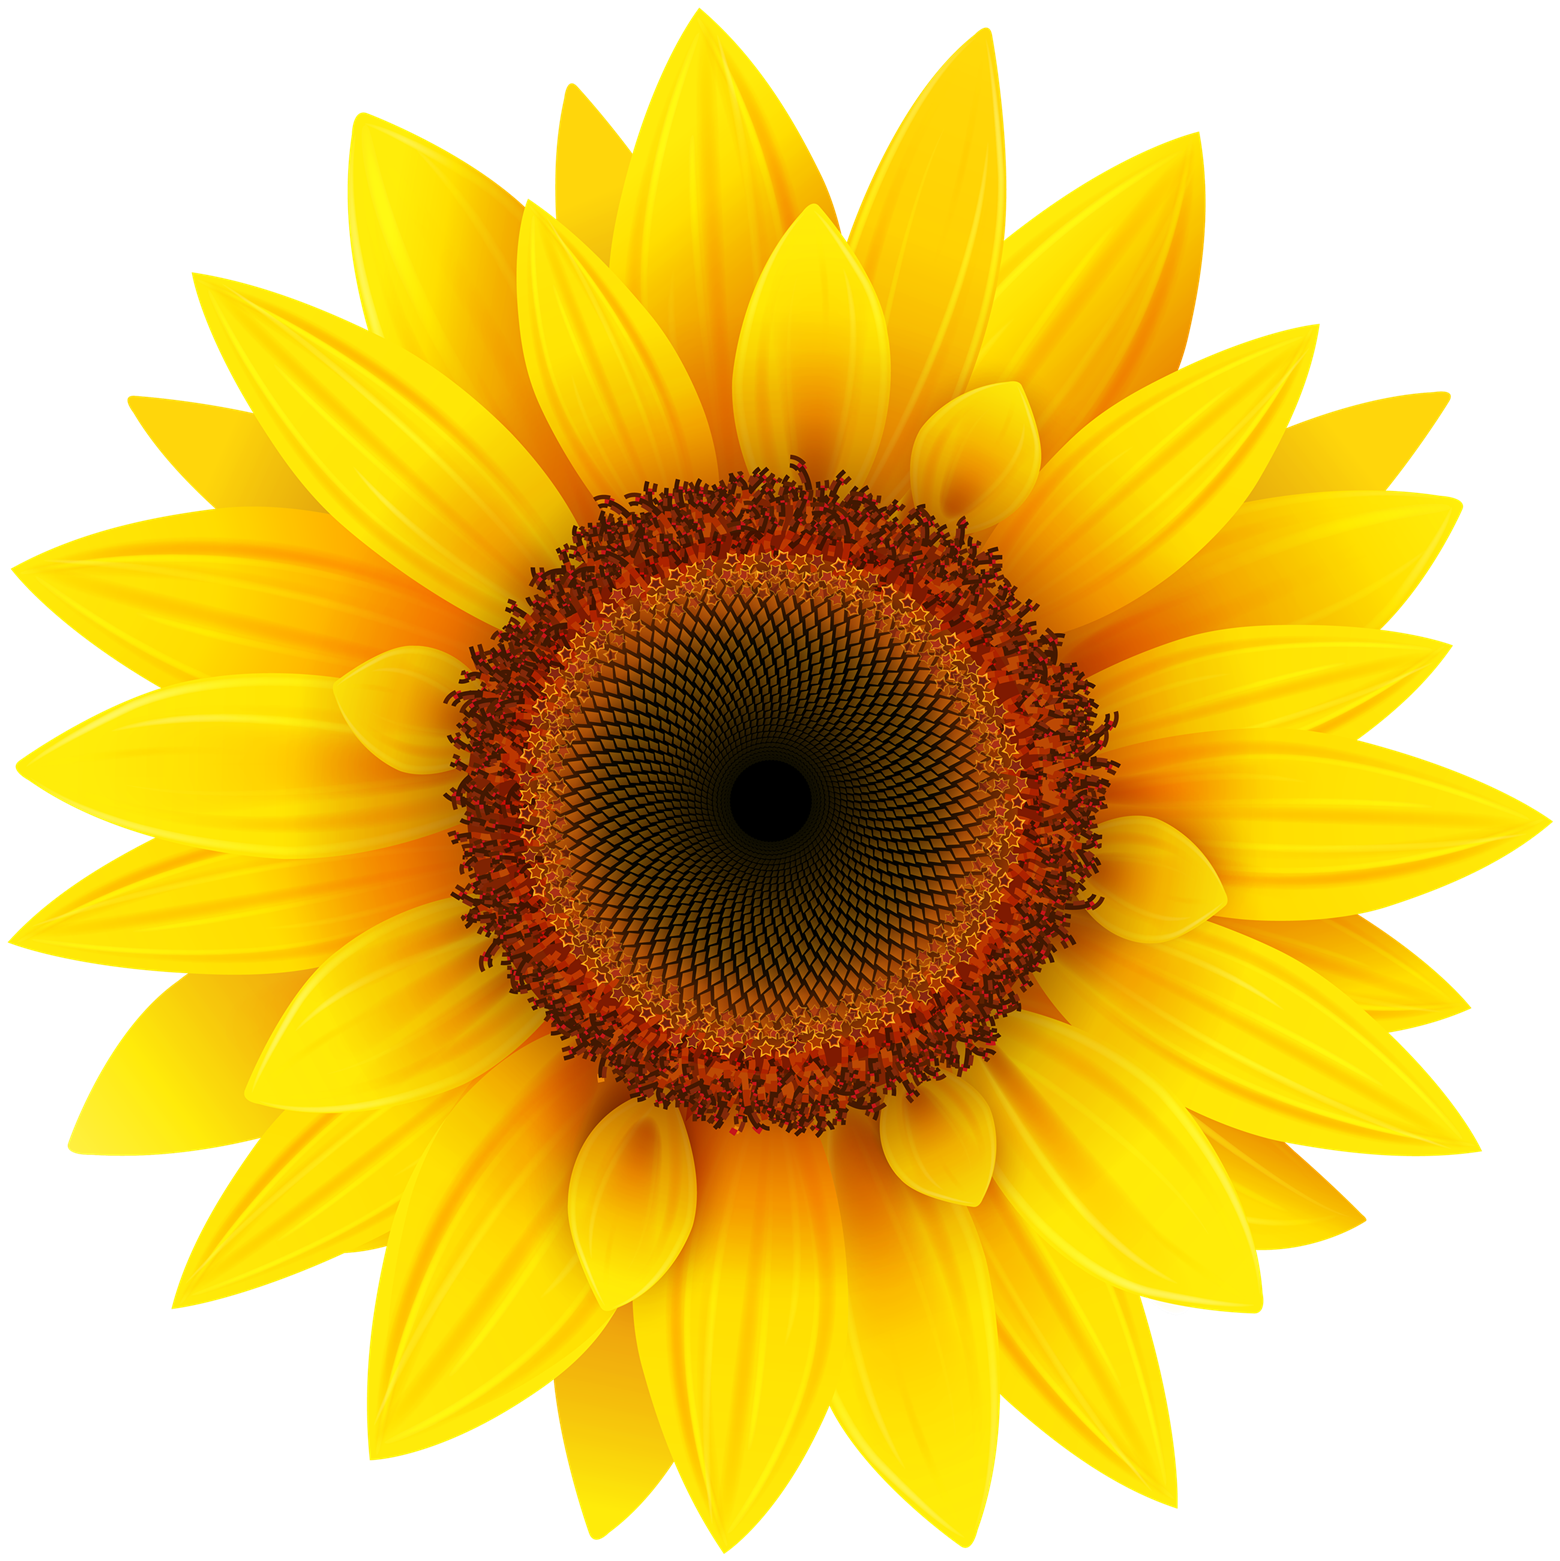 Download Free Sunflower Transparent Image ICON favicon | FreePNGImg